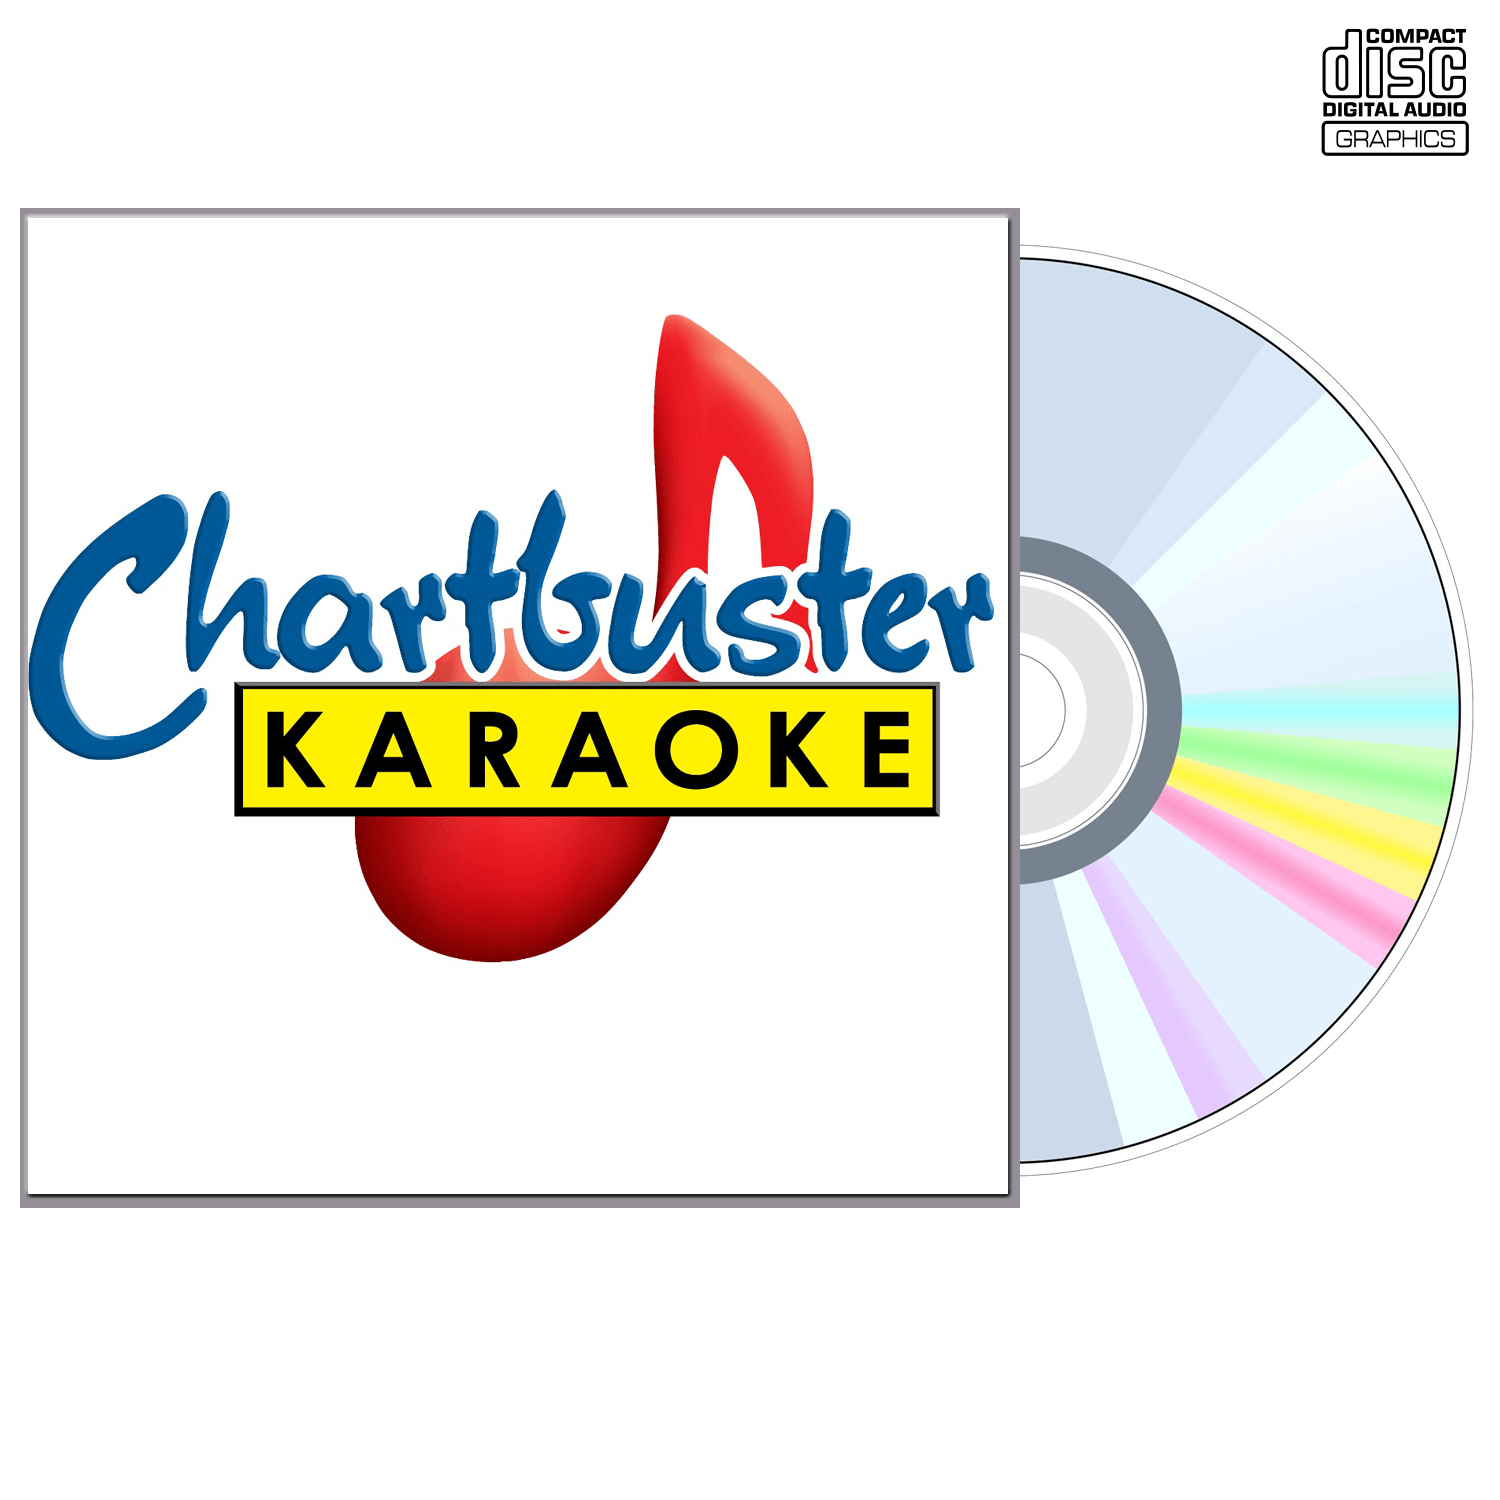 Joe Diffie Vol 1 - CD+G - Chartbuster Karaoke - Karaoke Home Entertainment